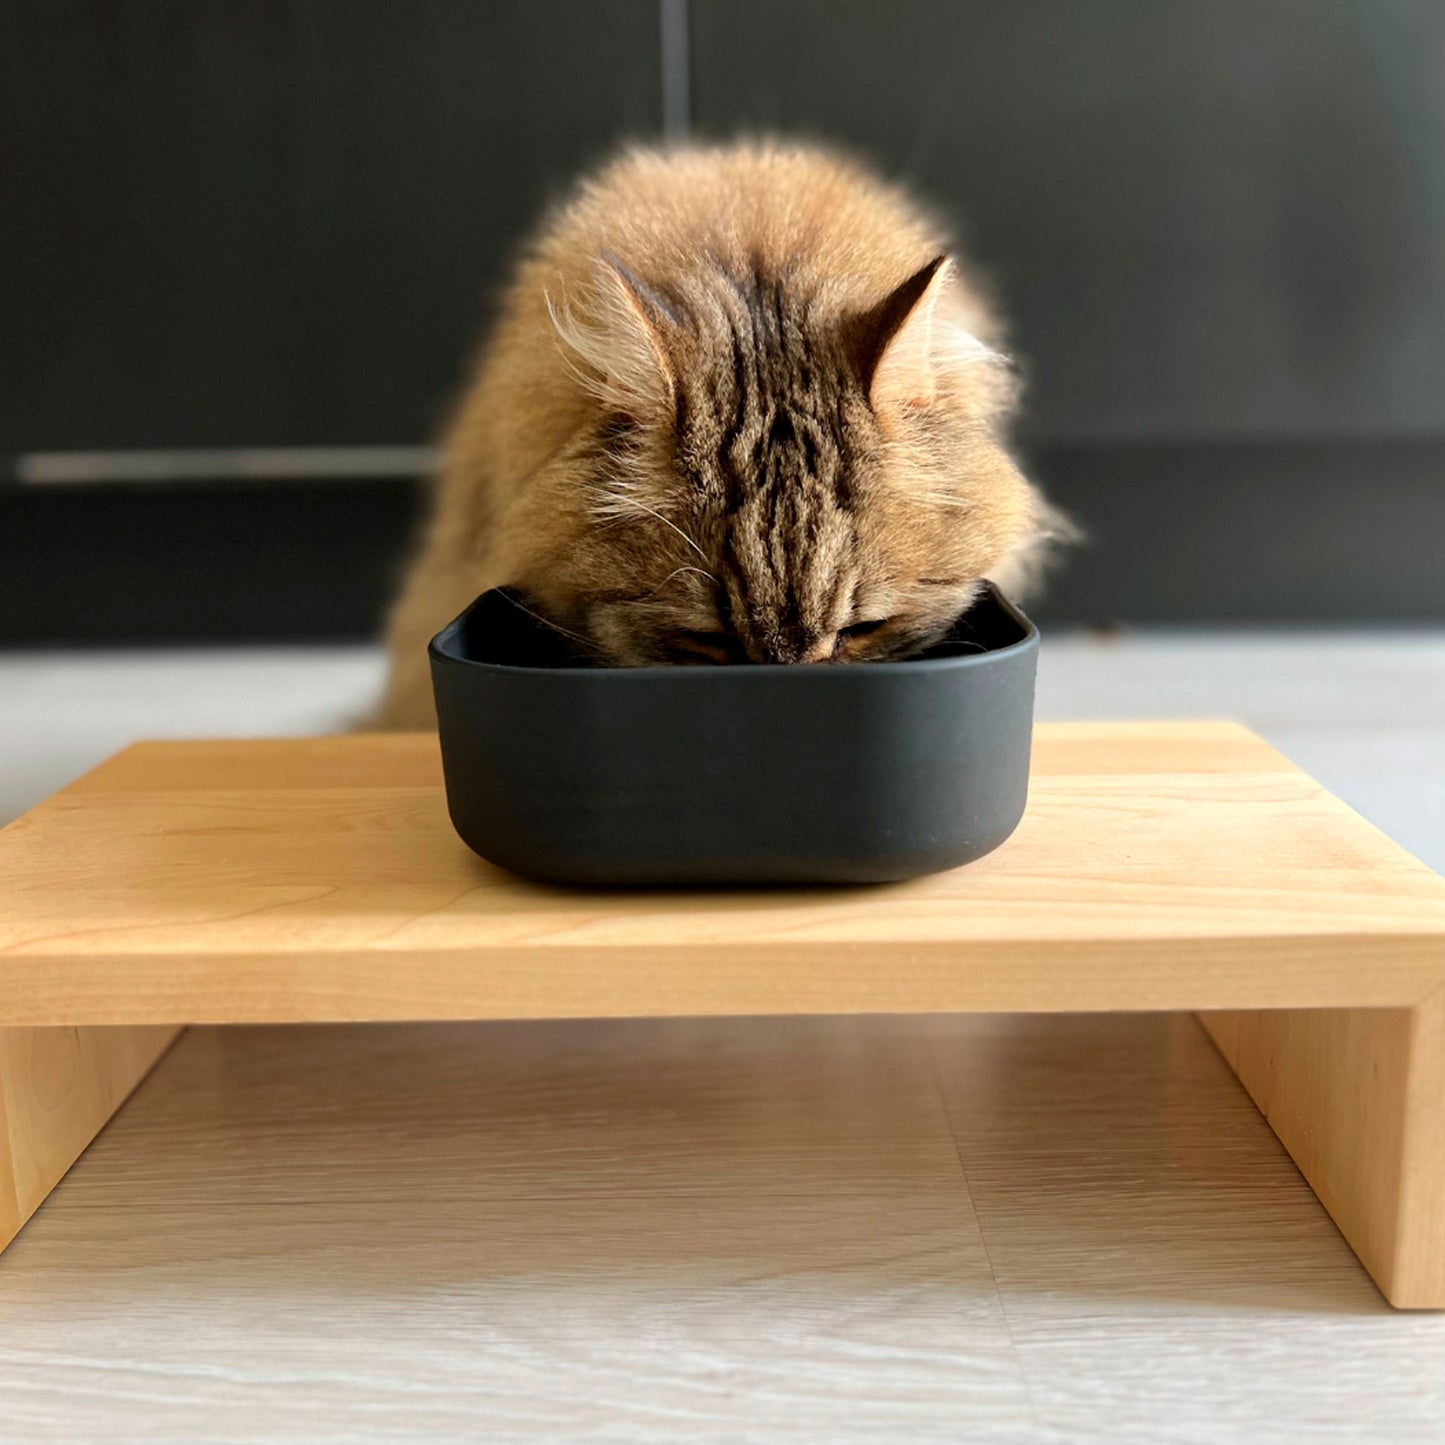 Kissapuu cat feeding table, no edge